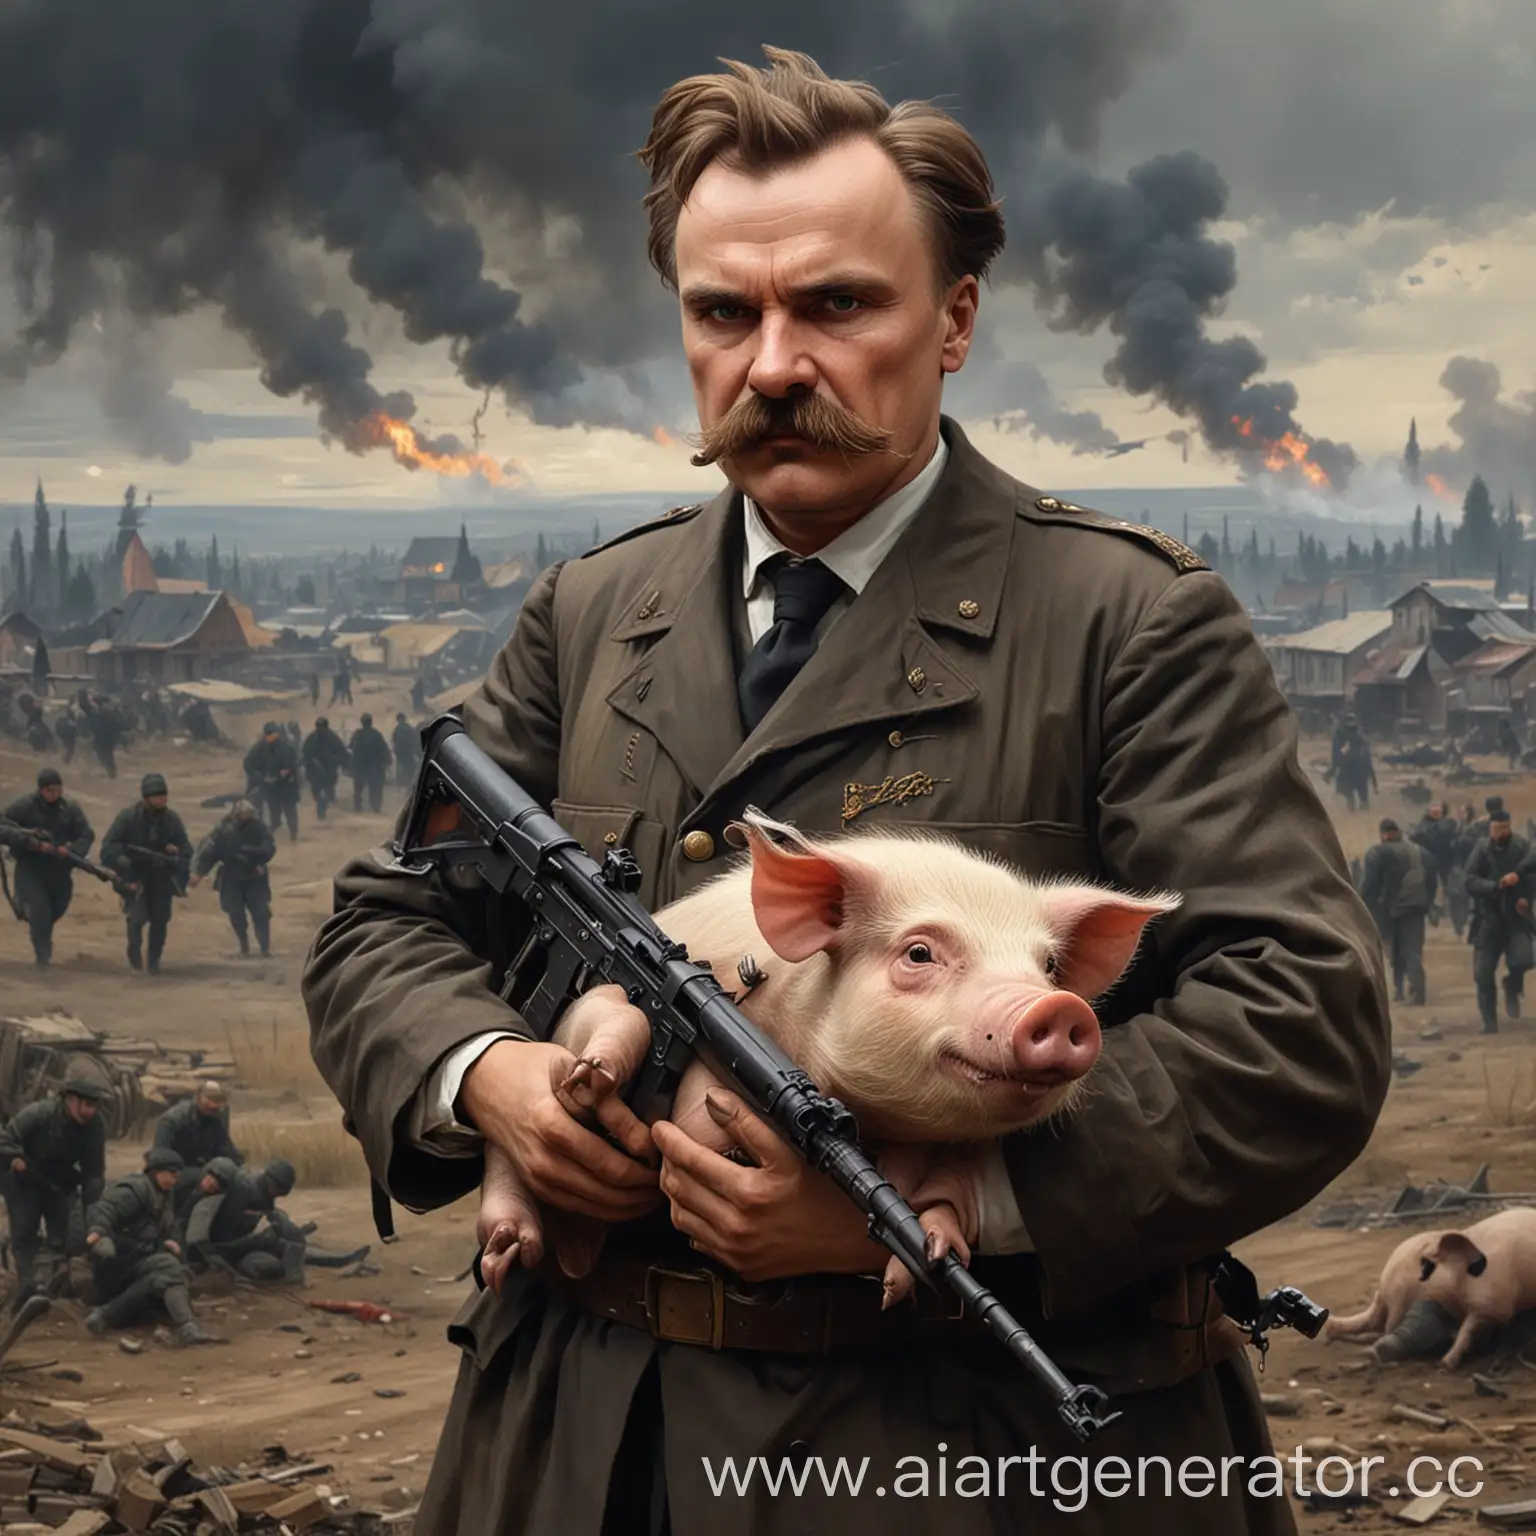 Friedrich-Nietzsche-in-Russian-Special-Operations-Battle-Scene-with-Automatic-Weapon-and-Fallen-Swine